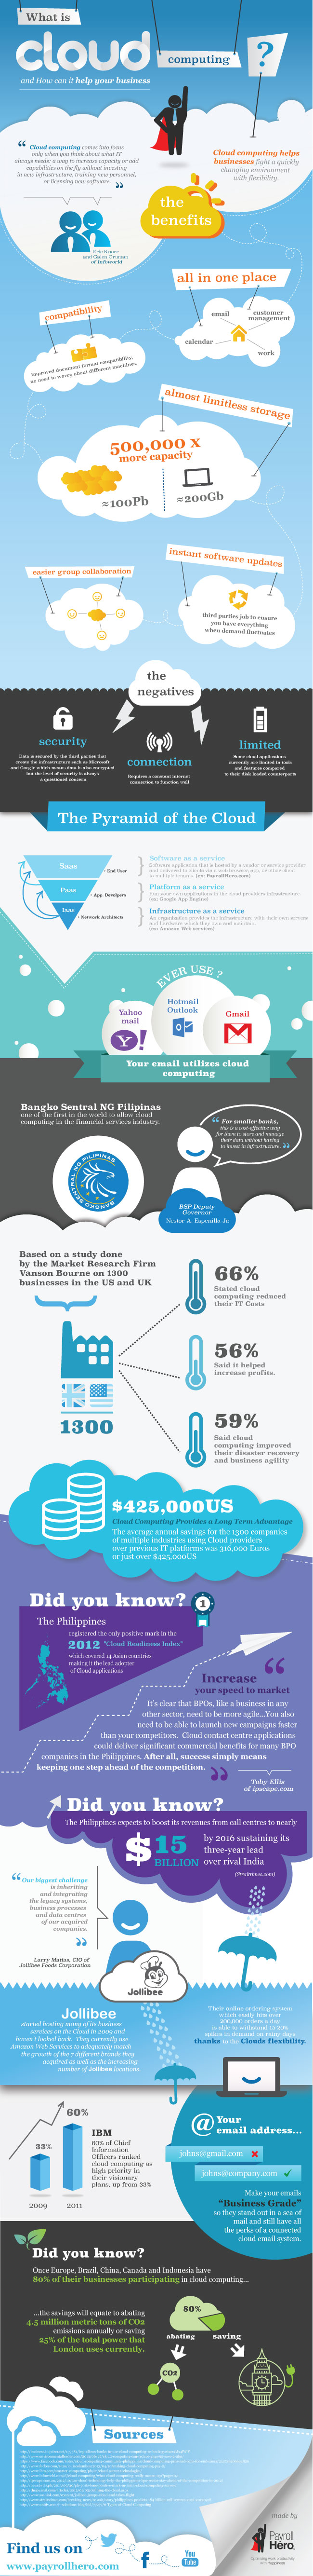 infographic-cloud-computing